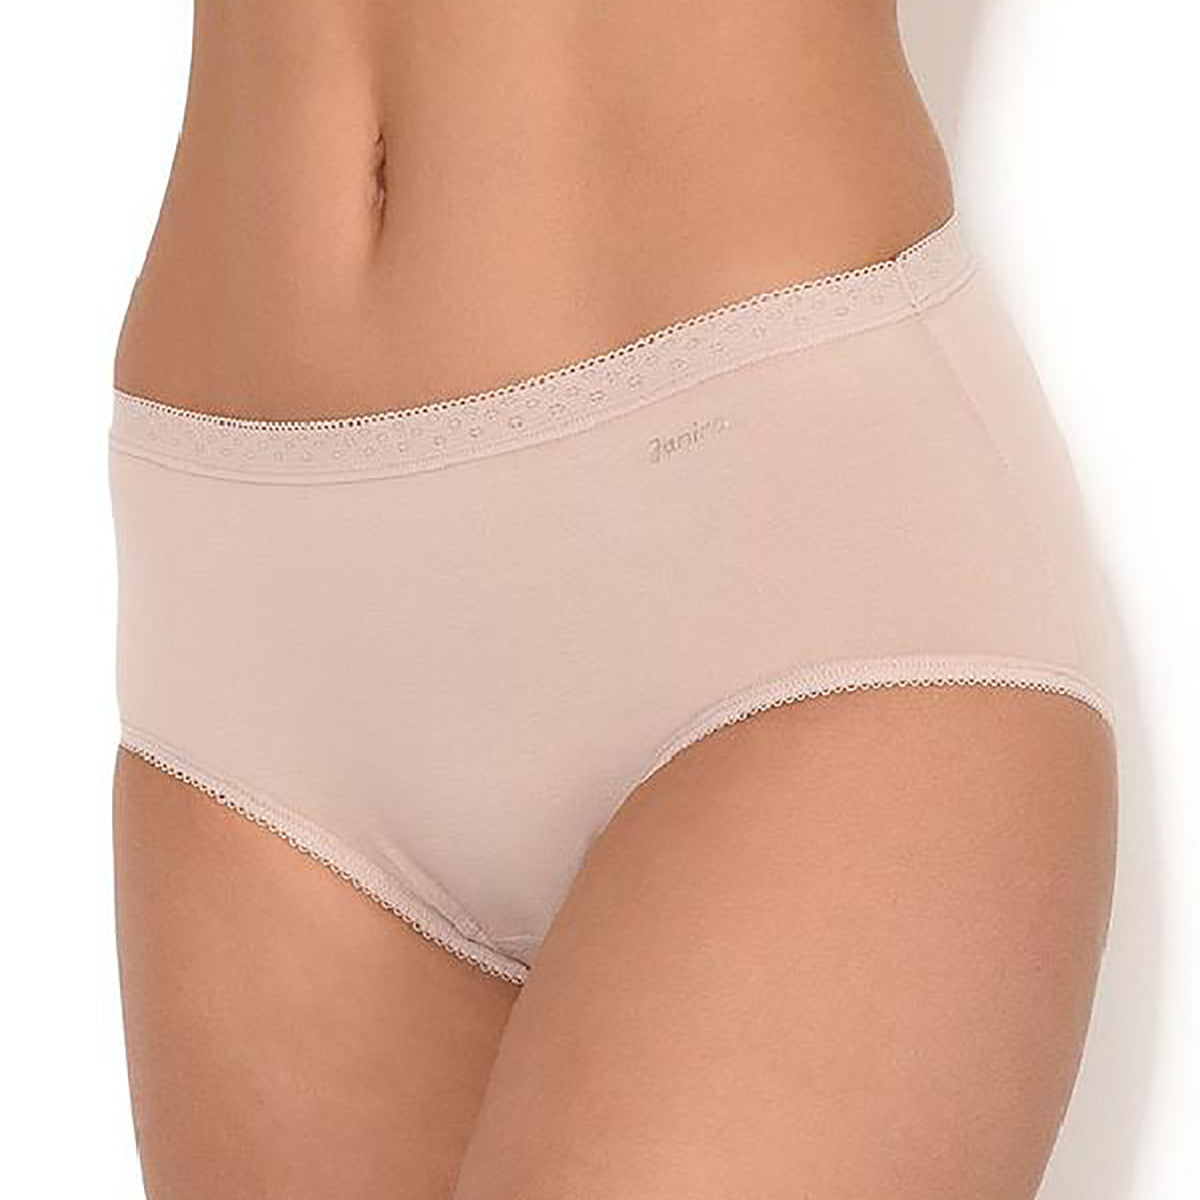 Janira Essential Cotton Midi Panty (2 Pack)